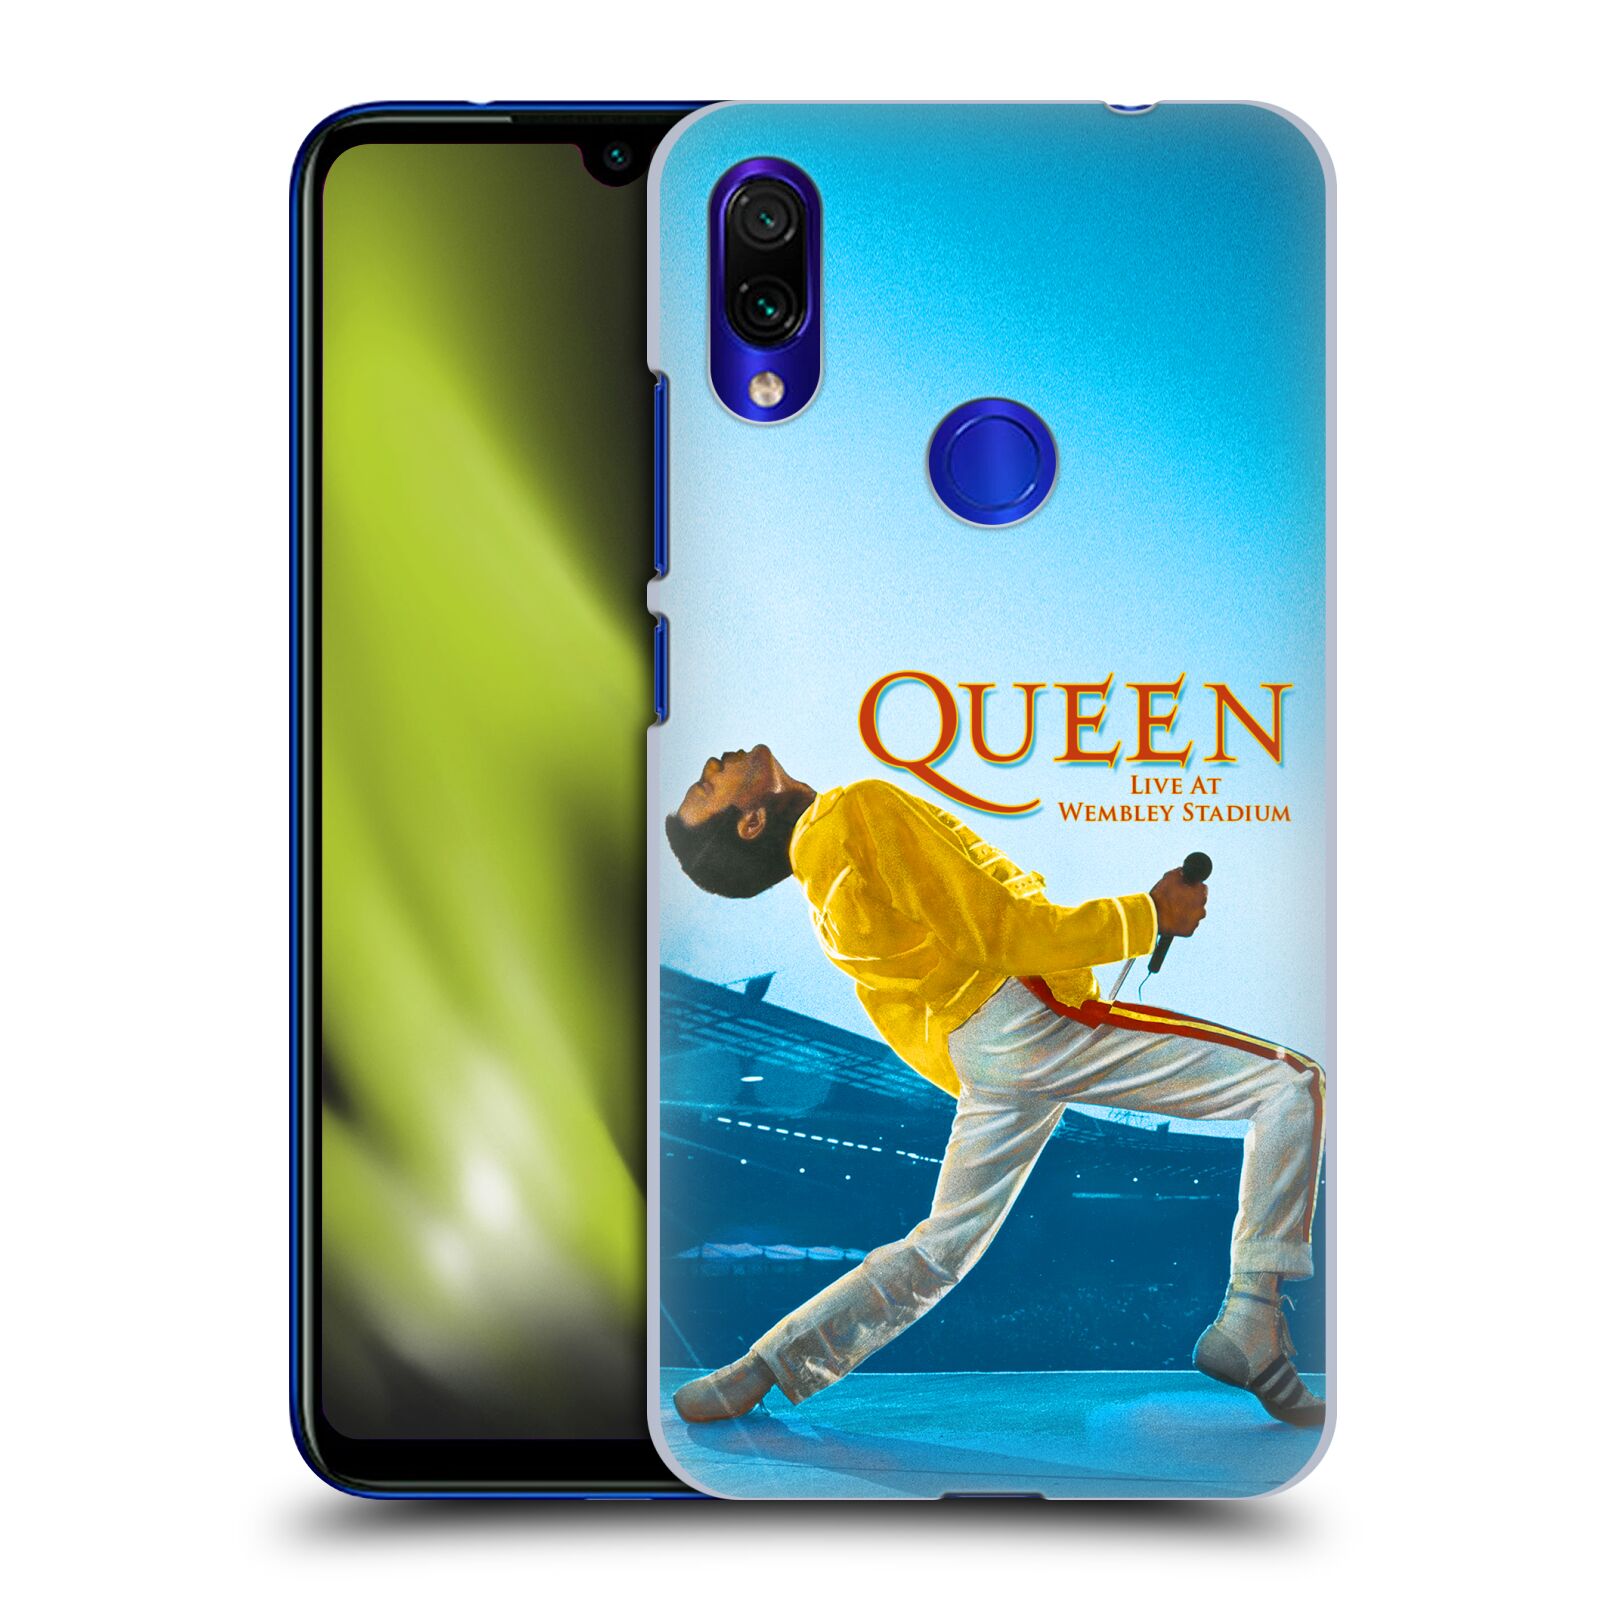 Pouzdro na mobil Xiaomi Redmi Note 7 - Head Case - zpěvák Queen skupina Freddie Mercury